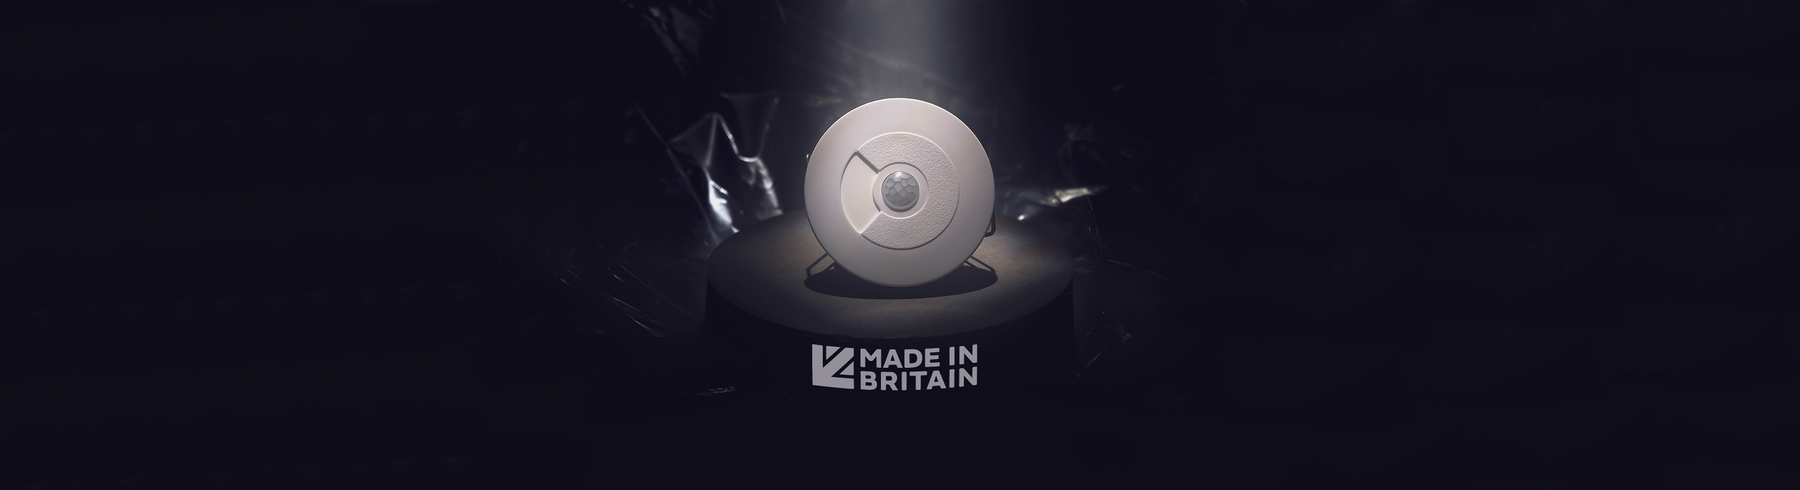 Faradite Motion sensor with Made in Britain logo